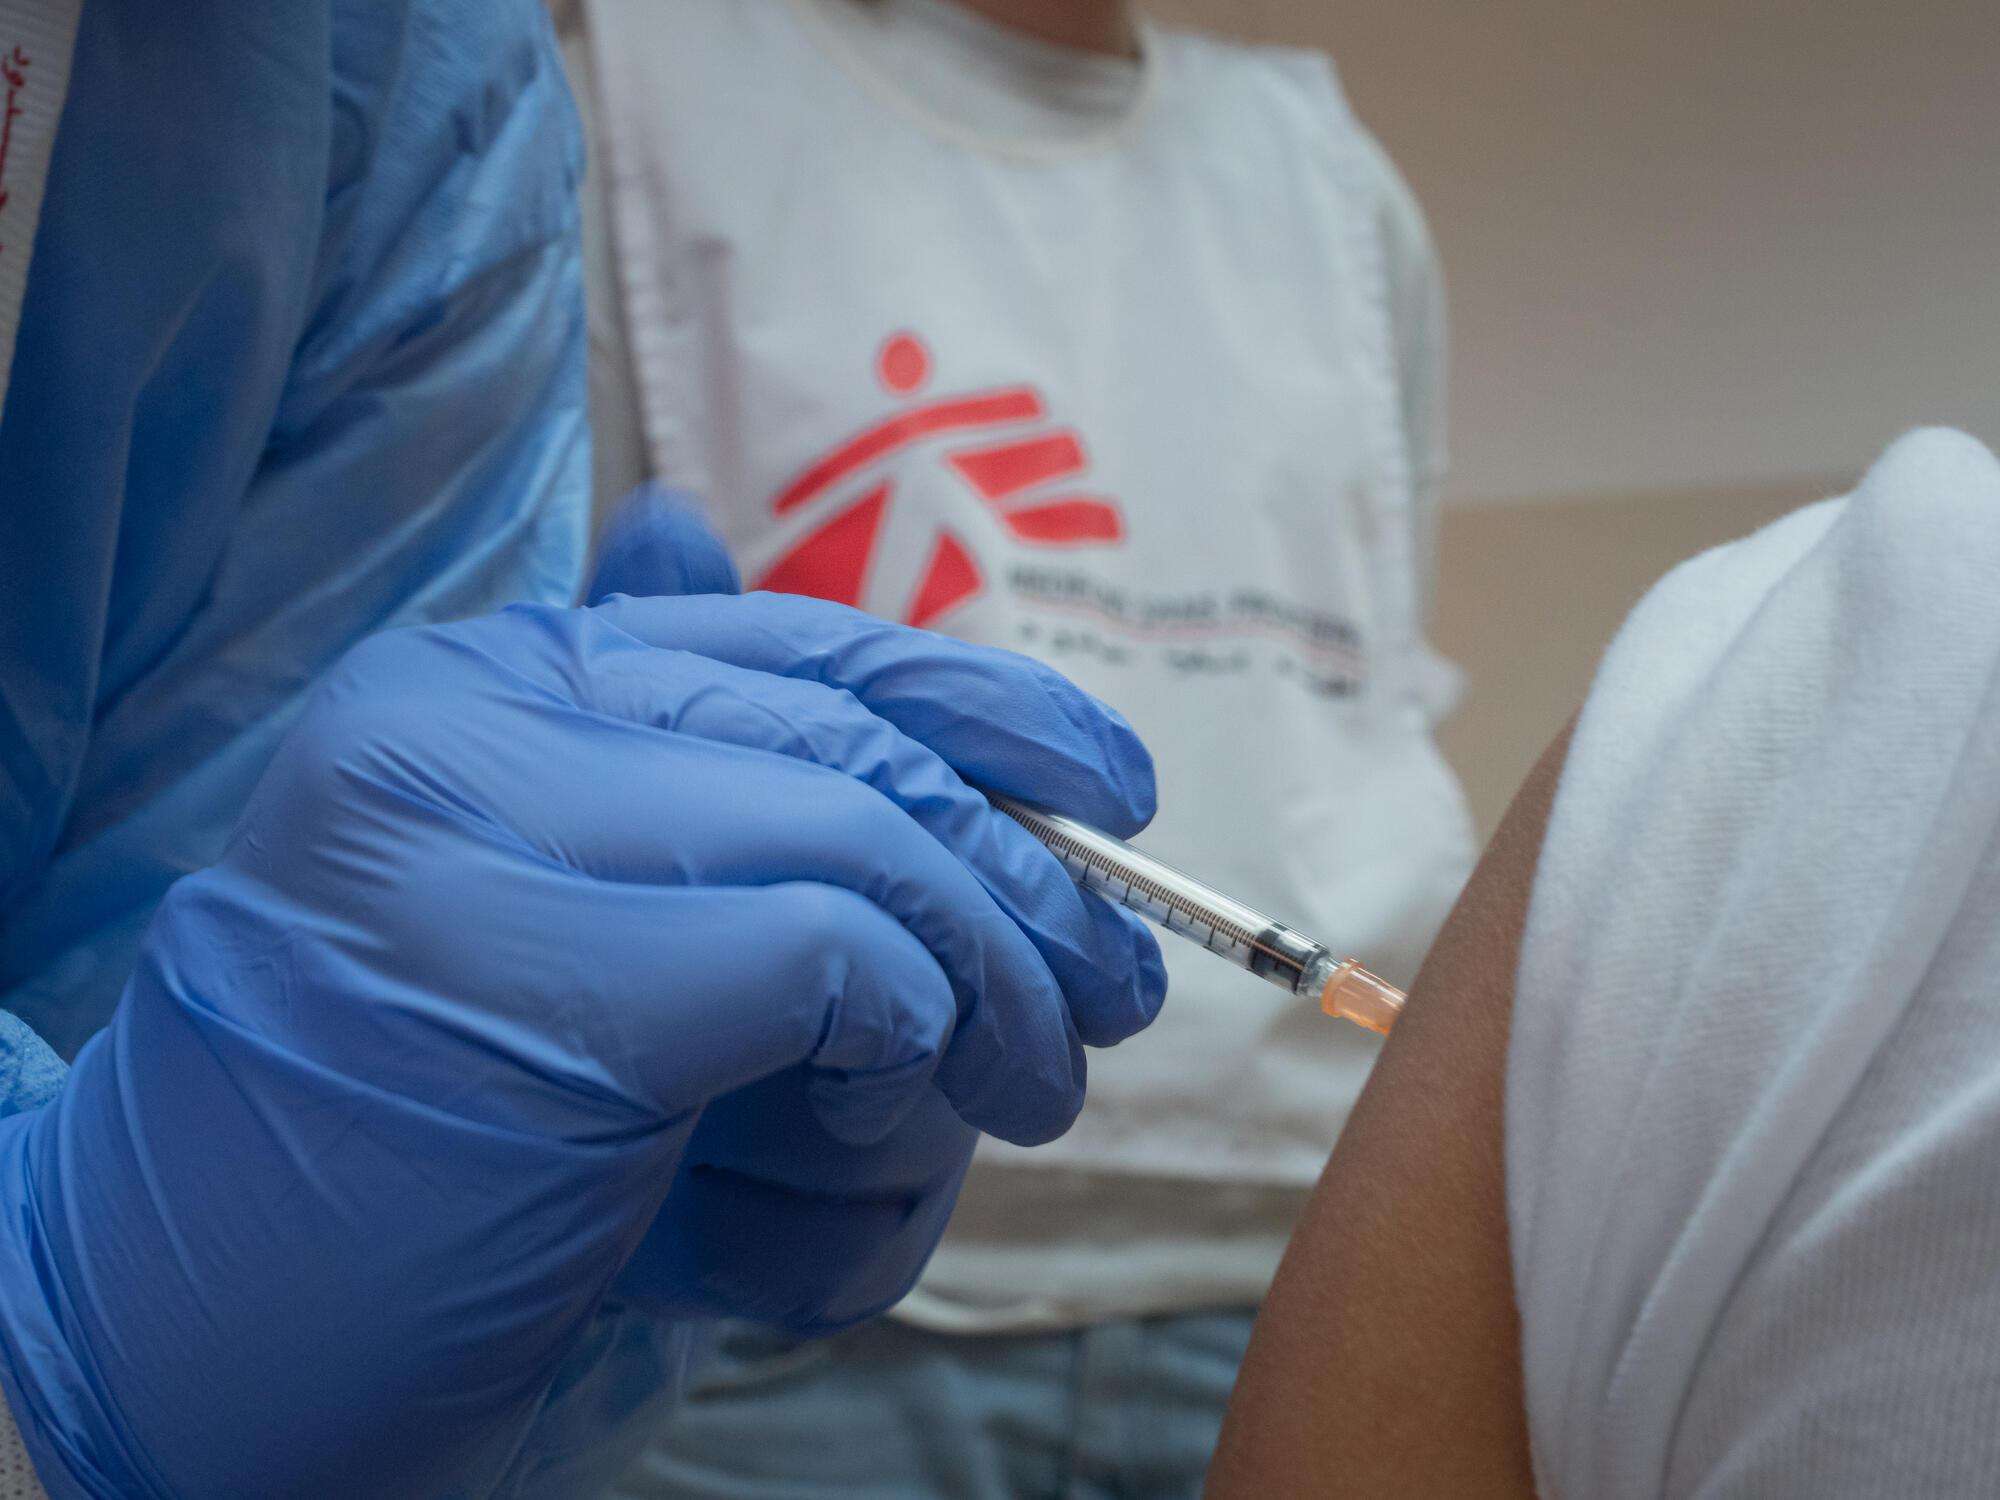 An MSF nurse administers a COVID-19 vaccine